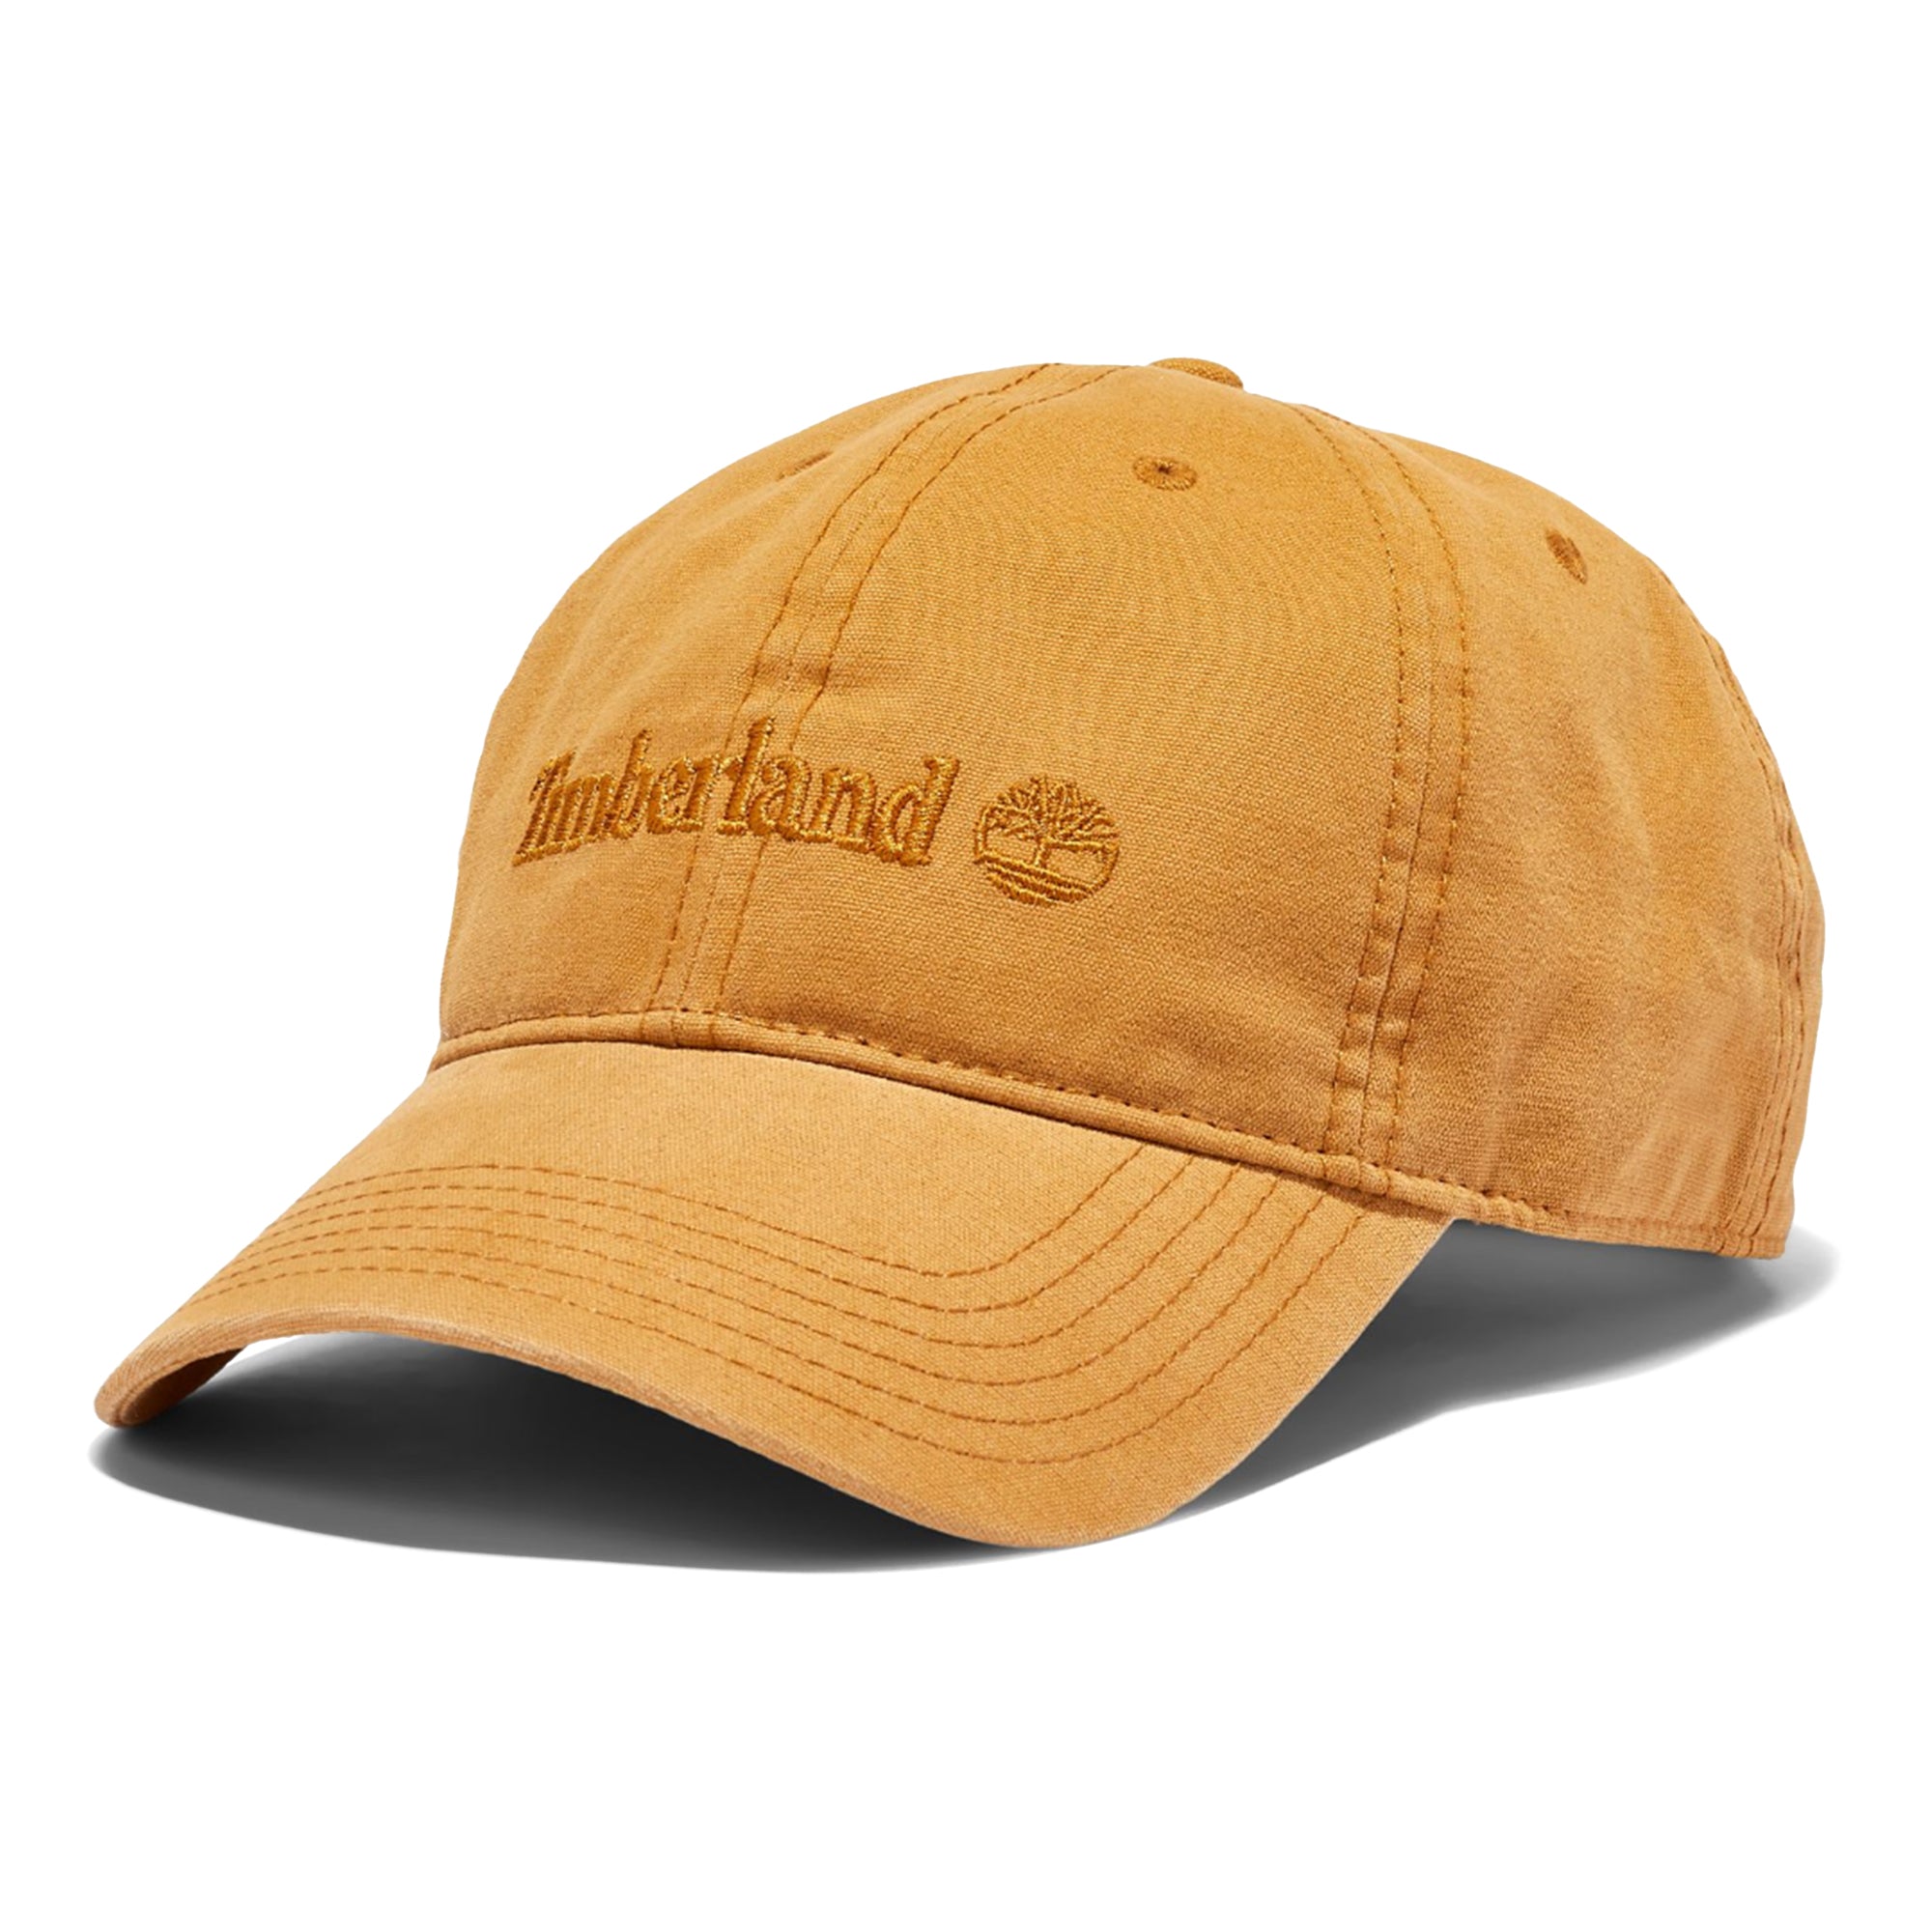 Timberland Baseball Cap - Wheat